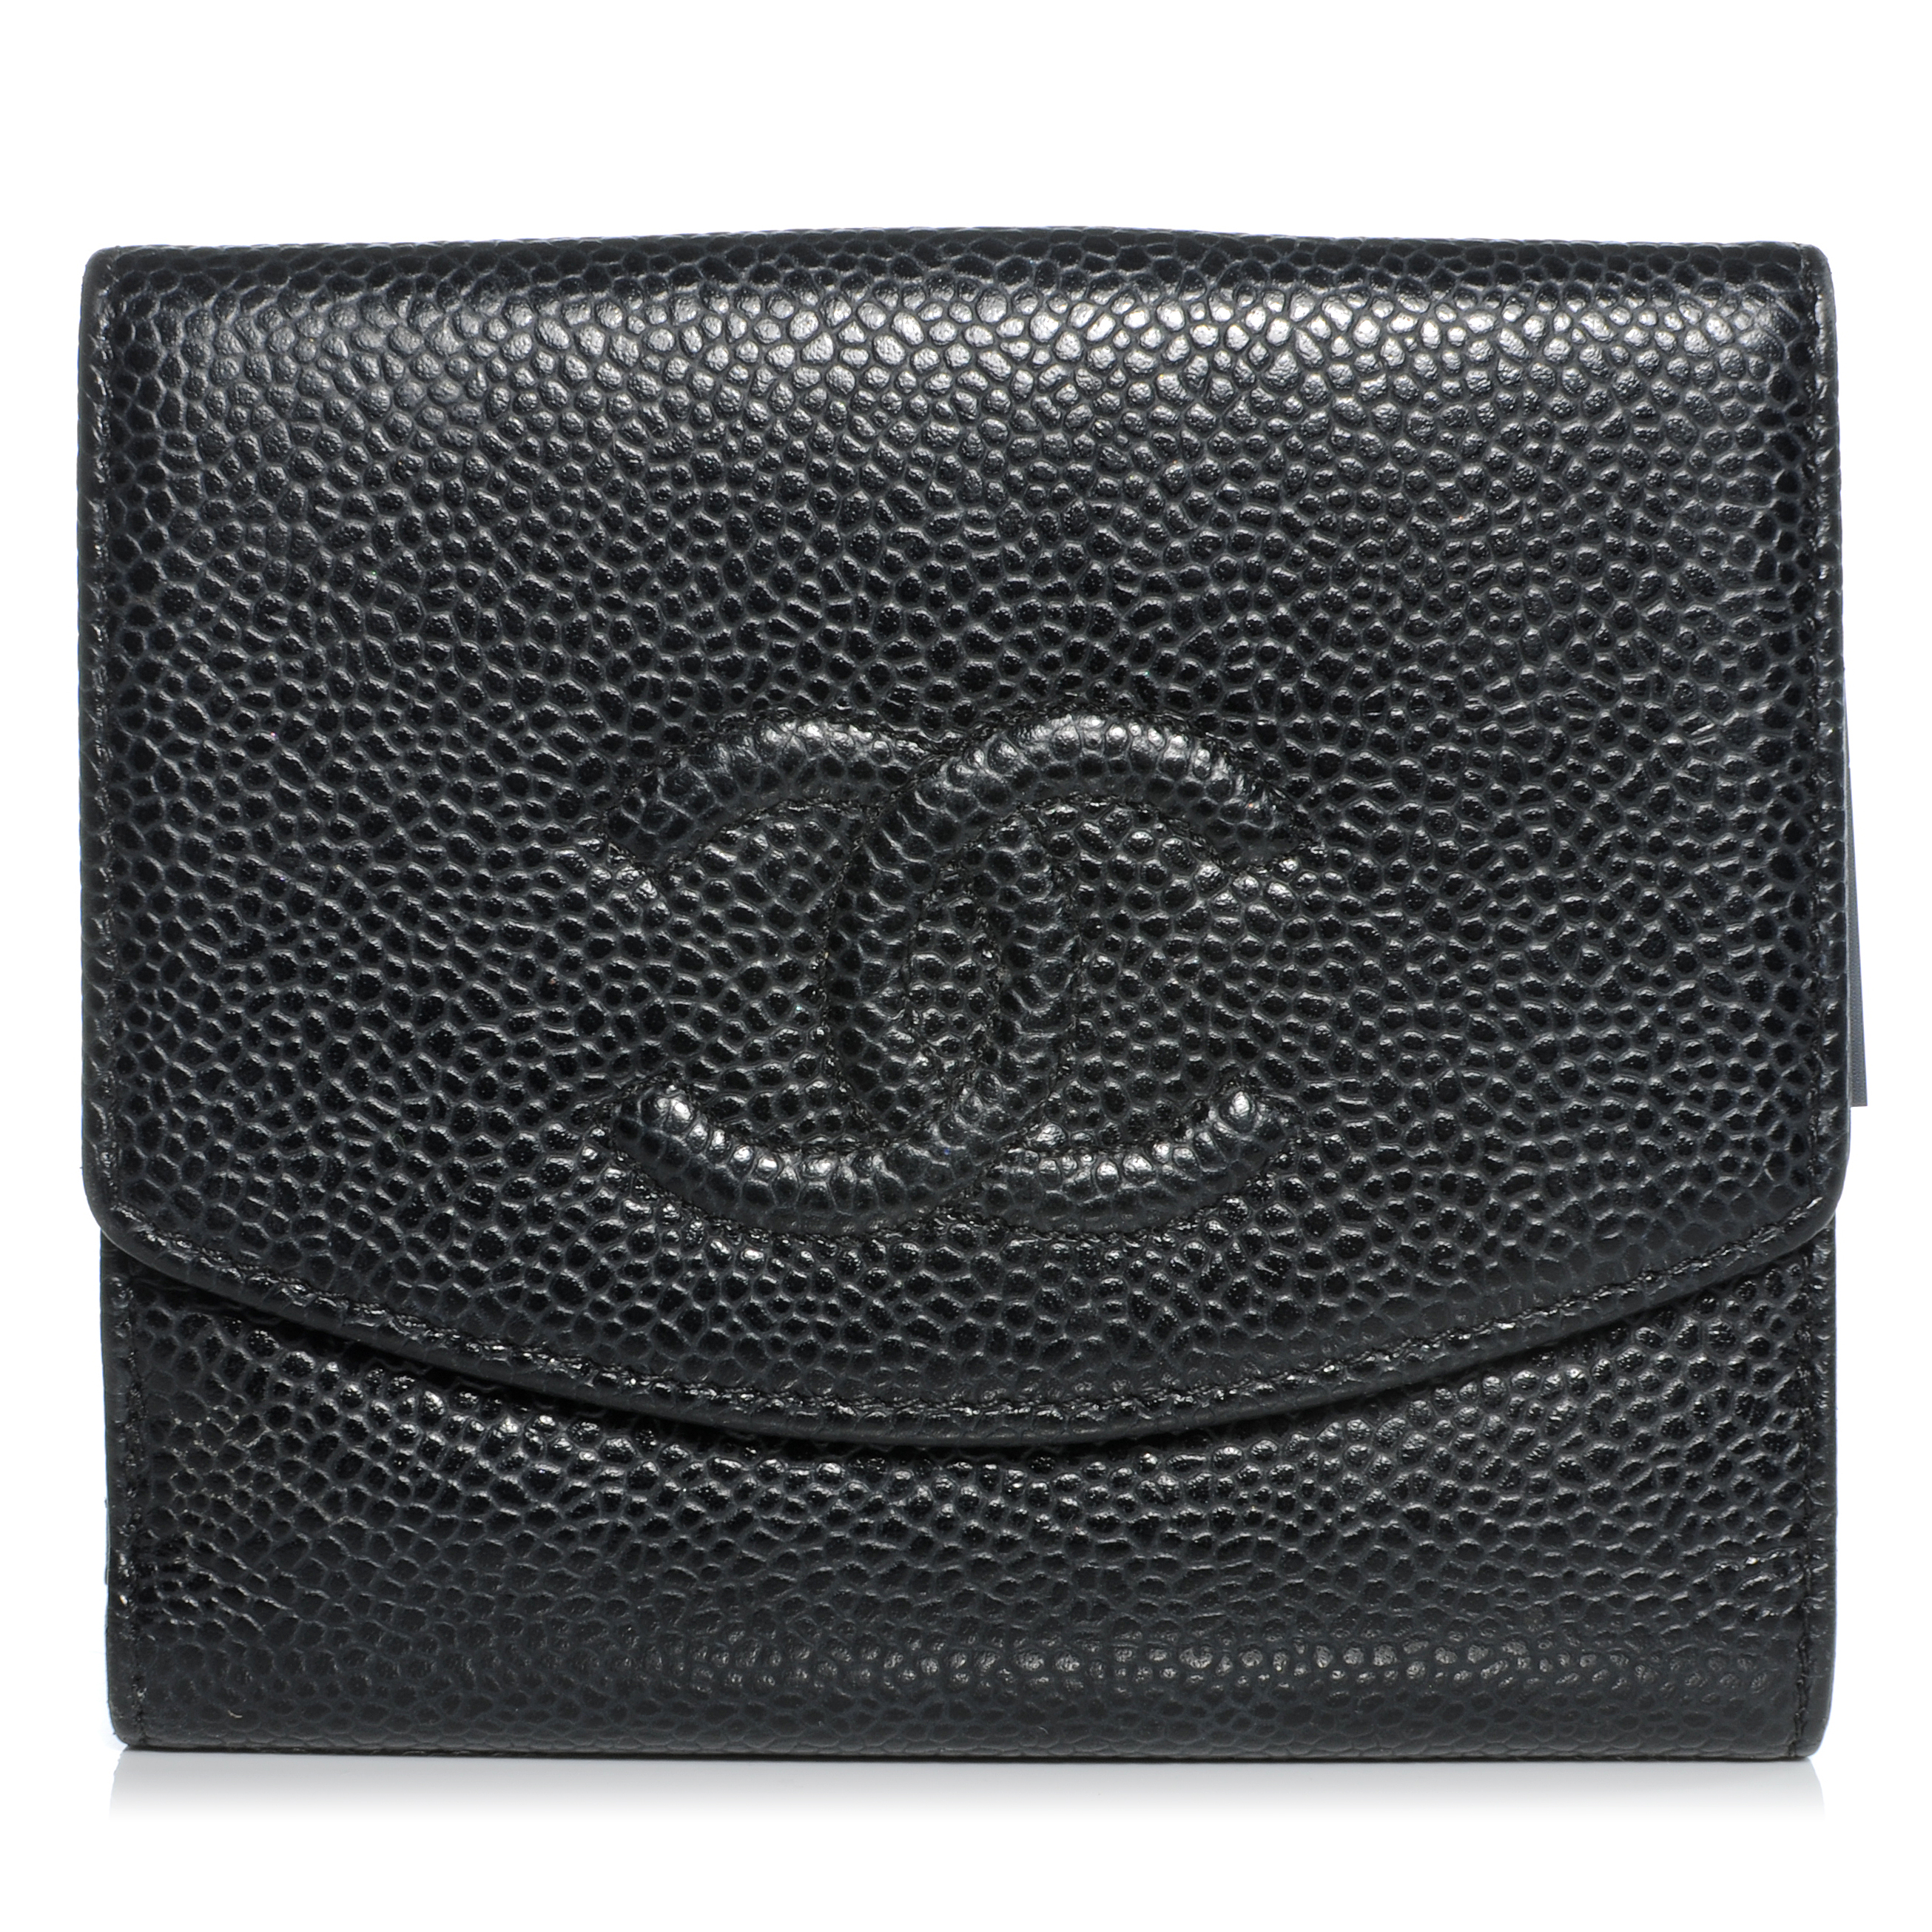 CHANEL Caviar Compact CC Wallet Black 41866